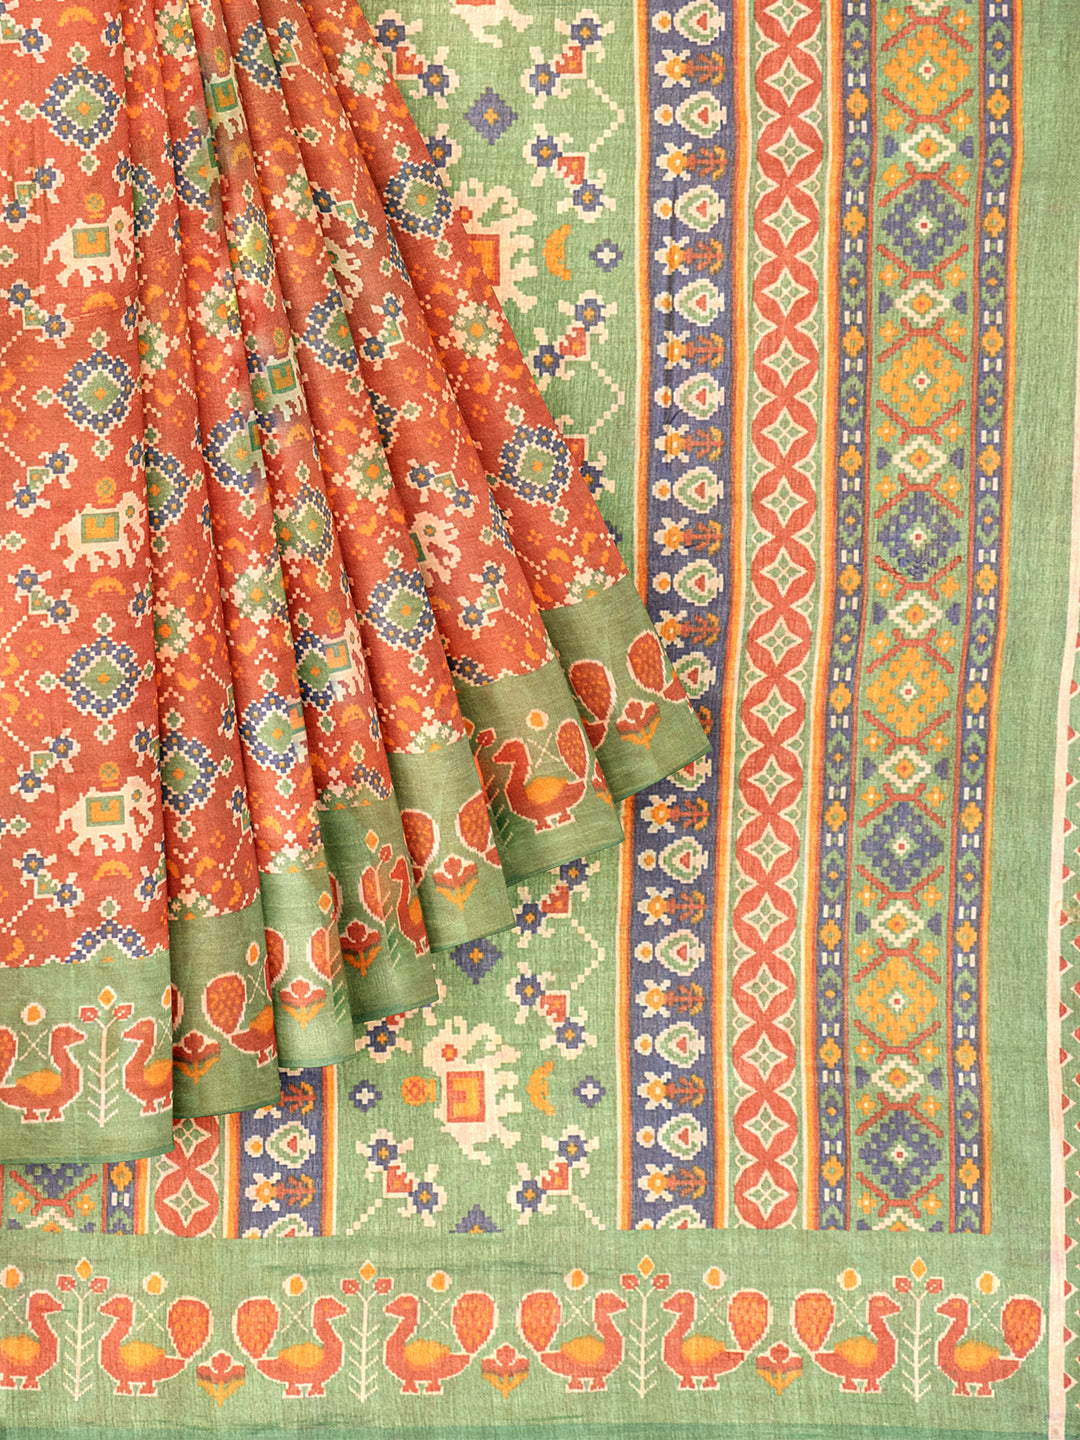 Women Green With Orange Colour Stylish Art Silk Fancy Jari Border Saree SS107